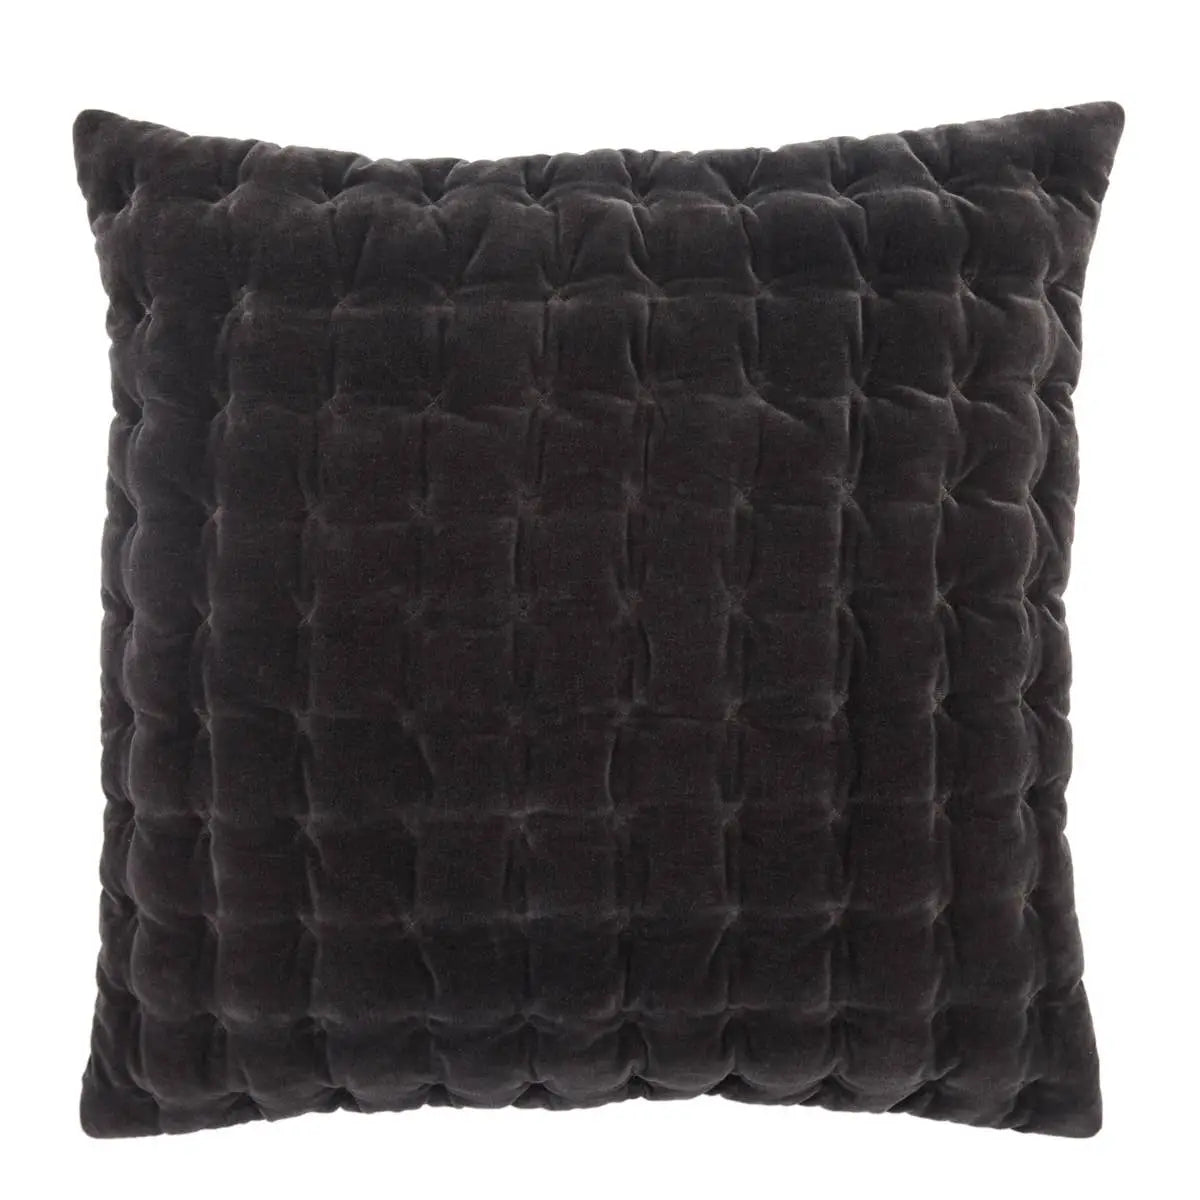 Lexington Pillow: Chic Lexington pillow from Grace Blu Shoppe, featuring a stylish design to elevate your home decor.